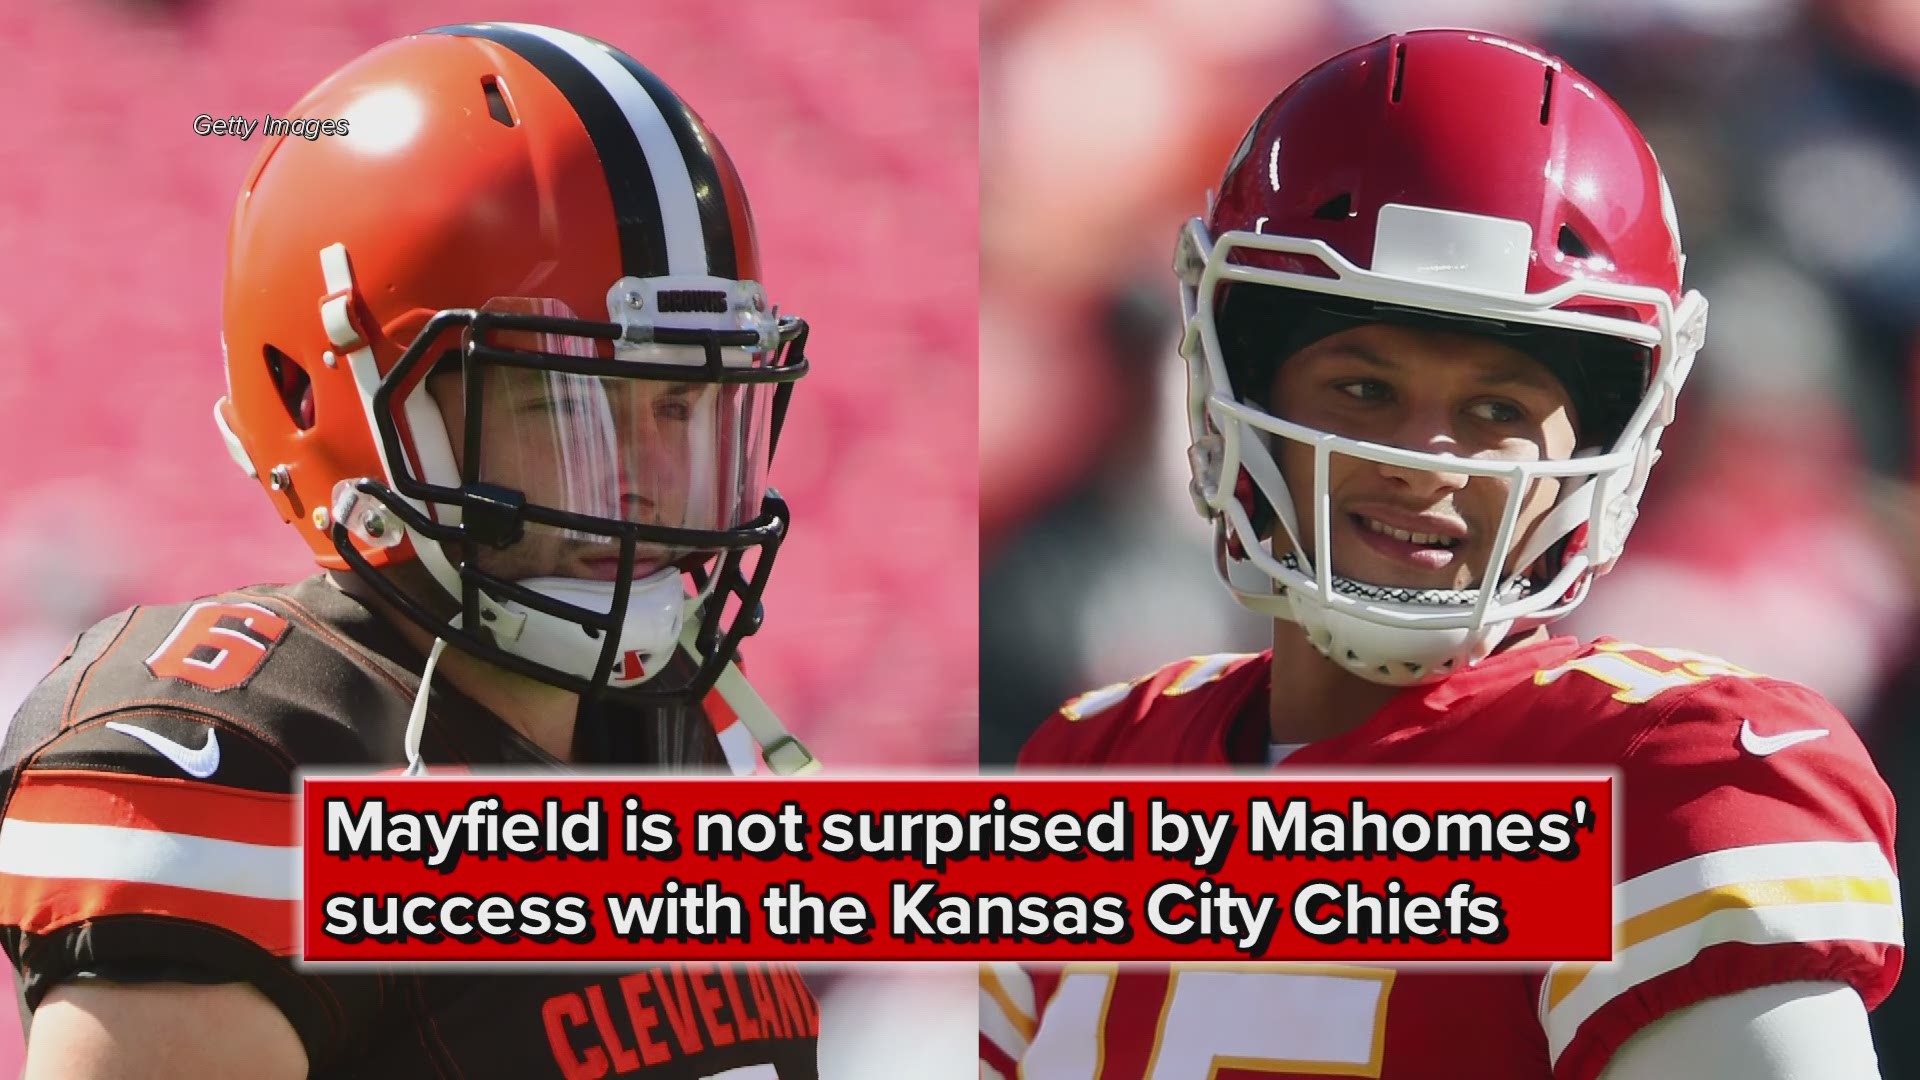 Patrick Mahomes: Fun Facts About Kansas City Chiefs Quarterback